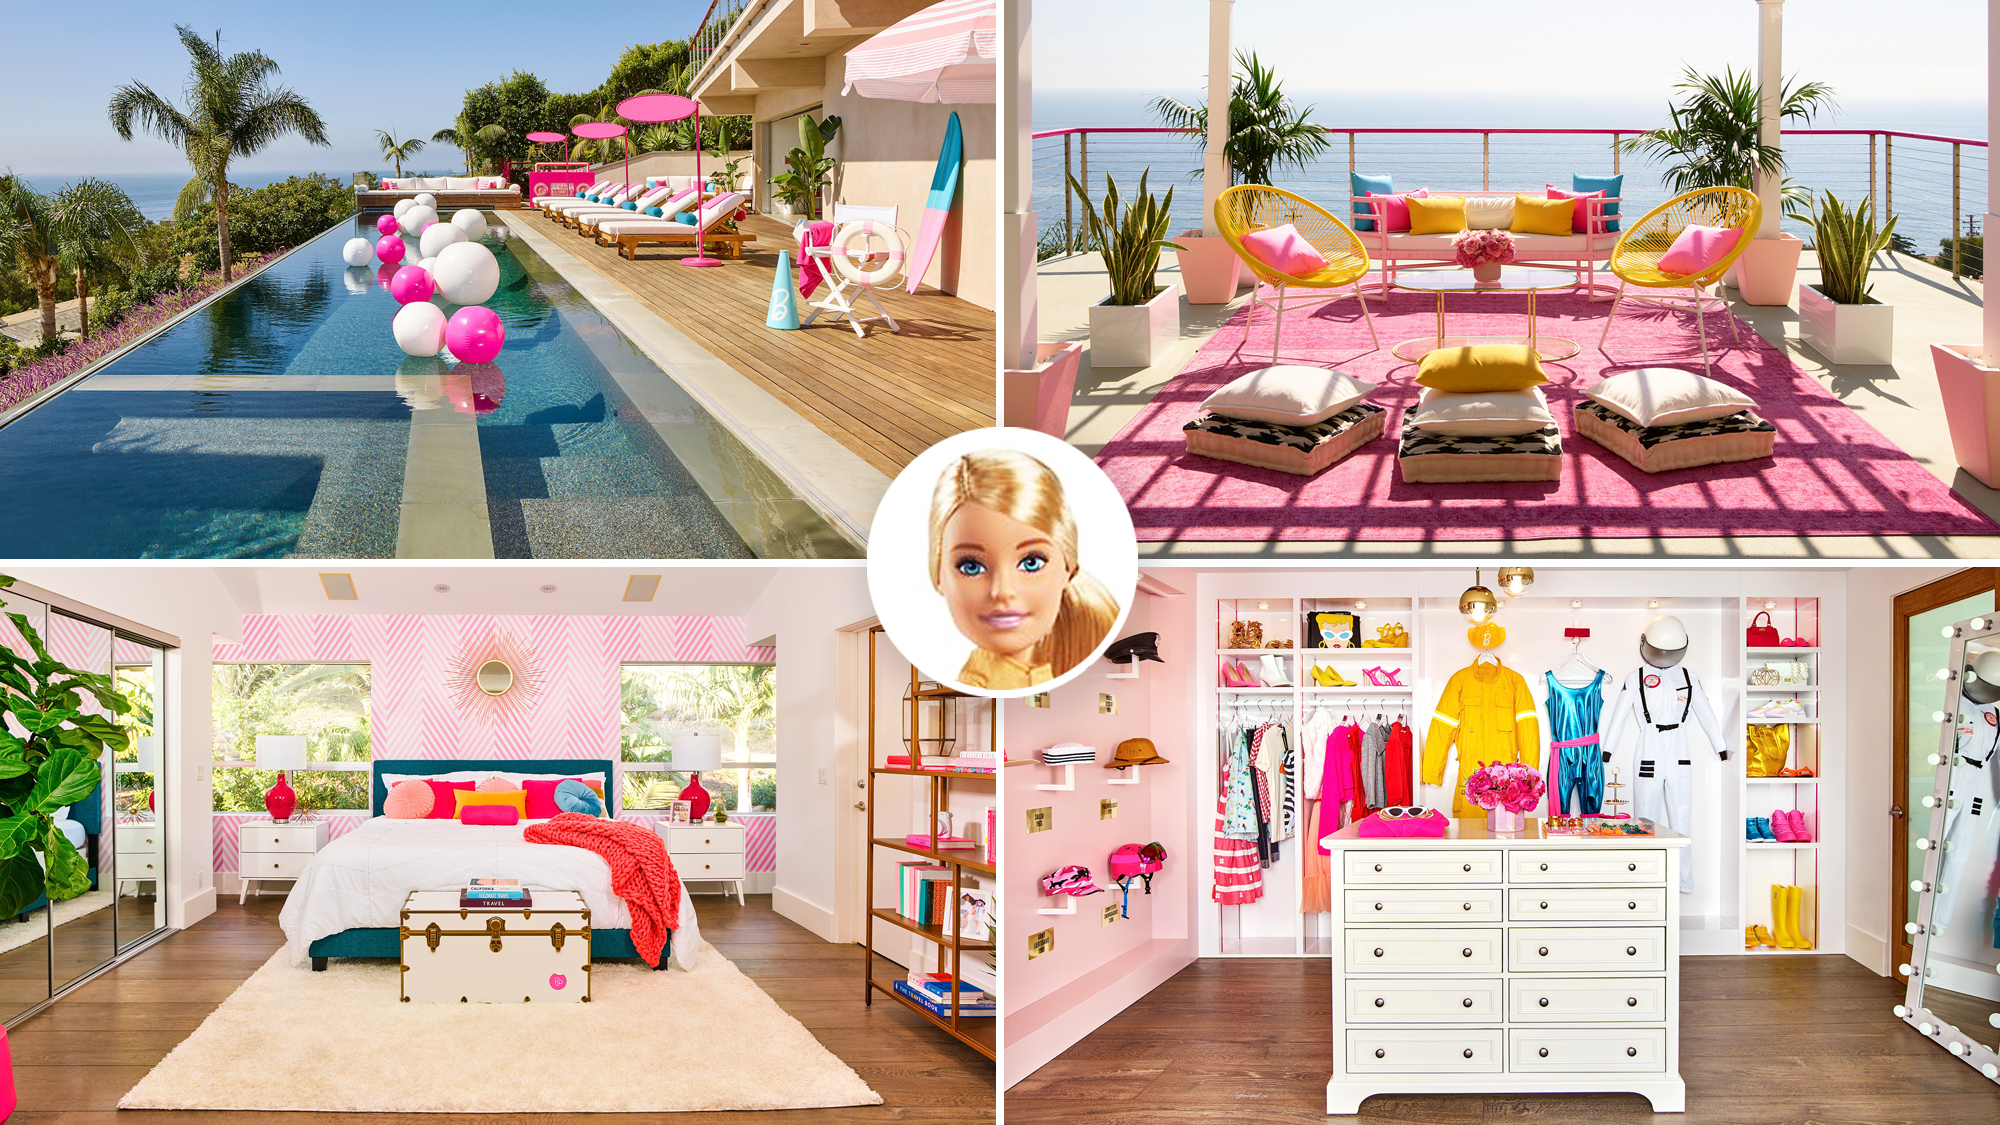 Barbie's Malibu Photos Airbnb: See Inside!